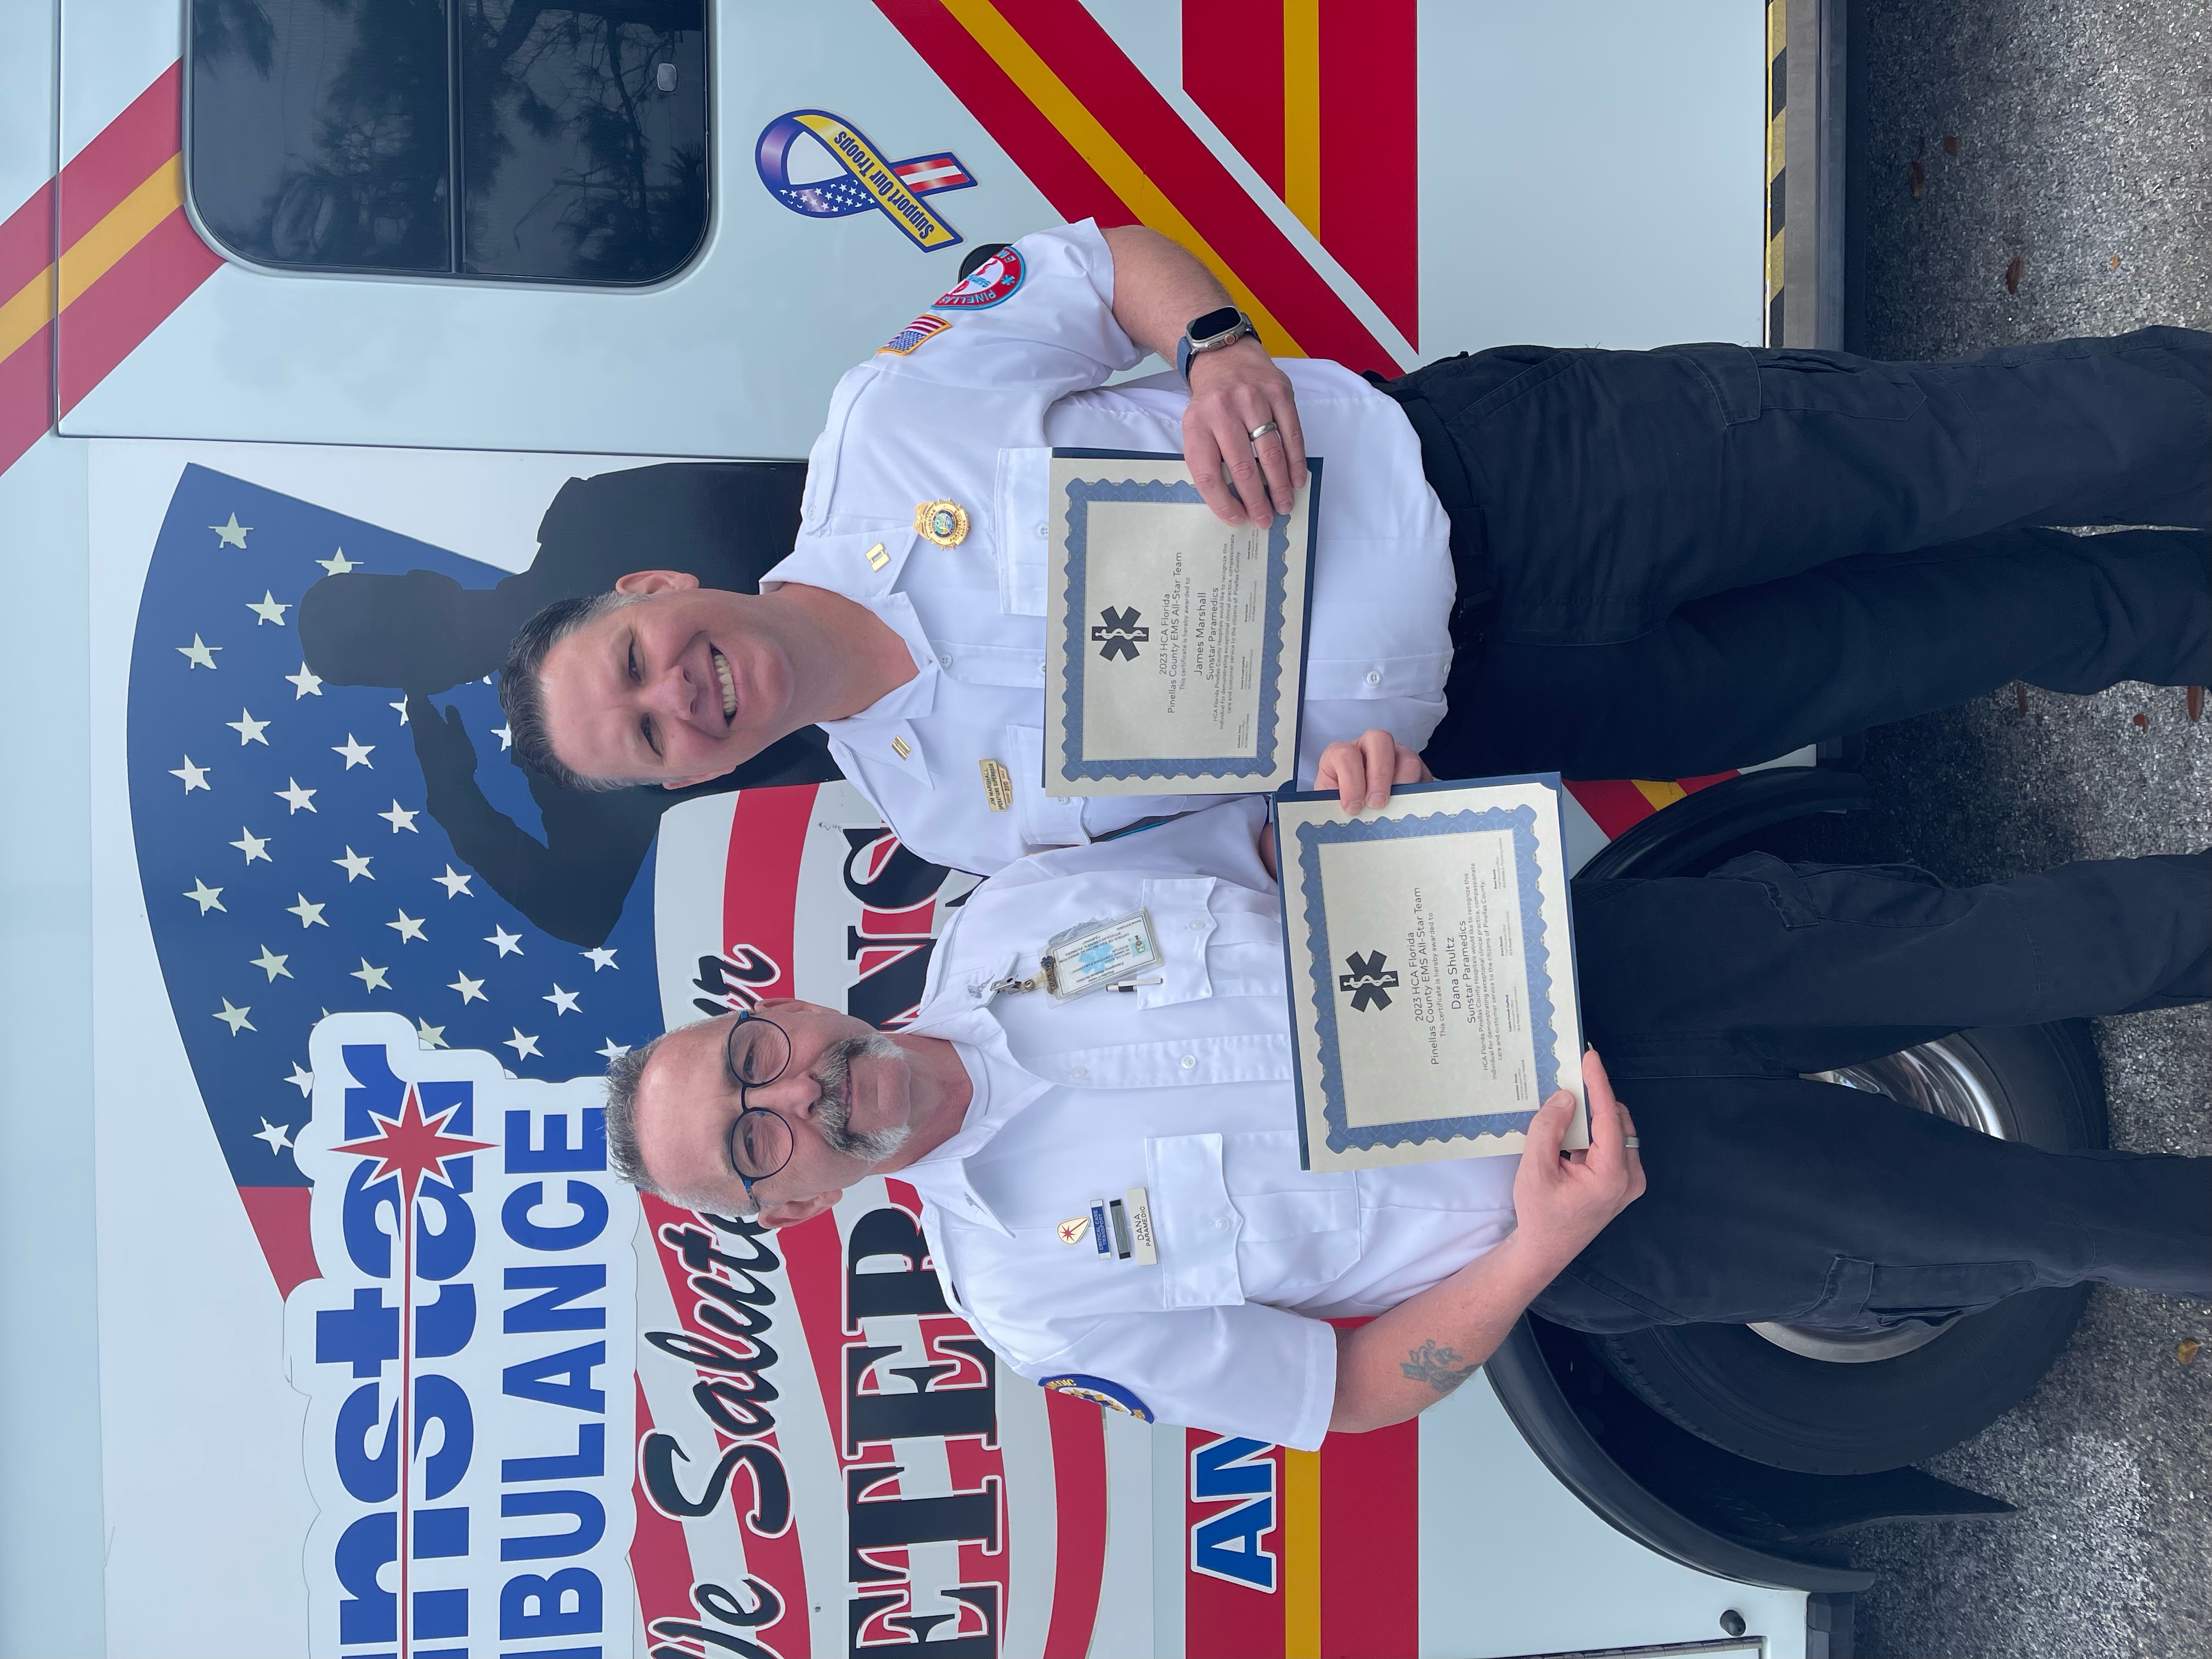 Dana Schultz and James Marshall of Sunstar Paramedics holding their awards